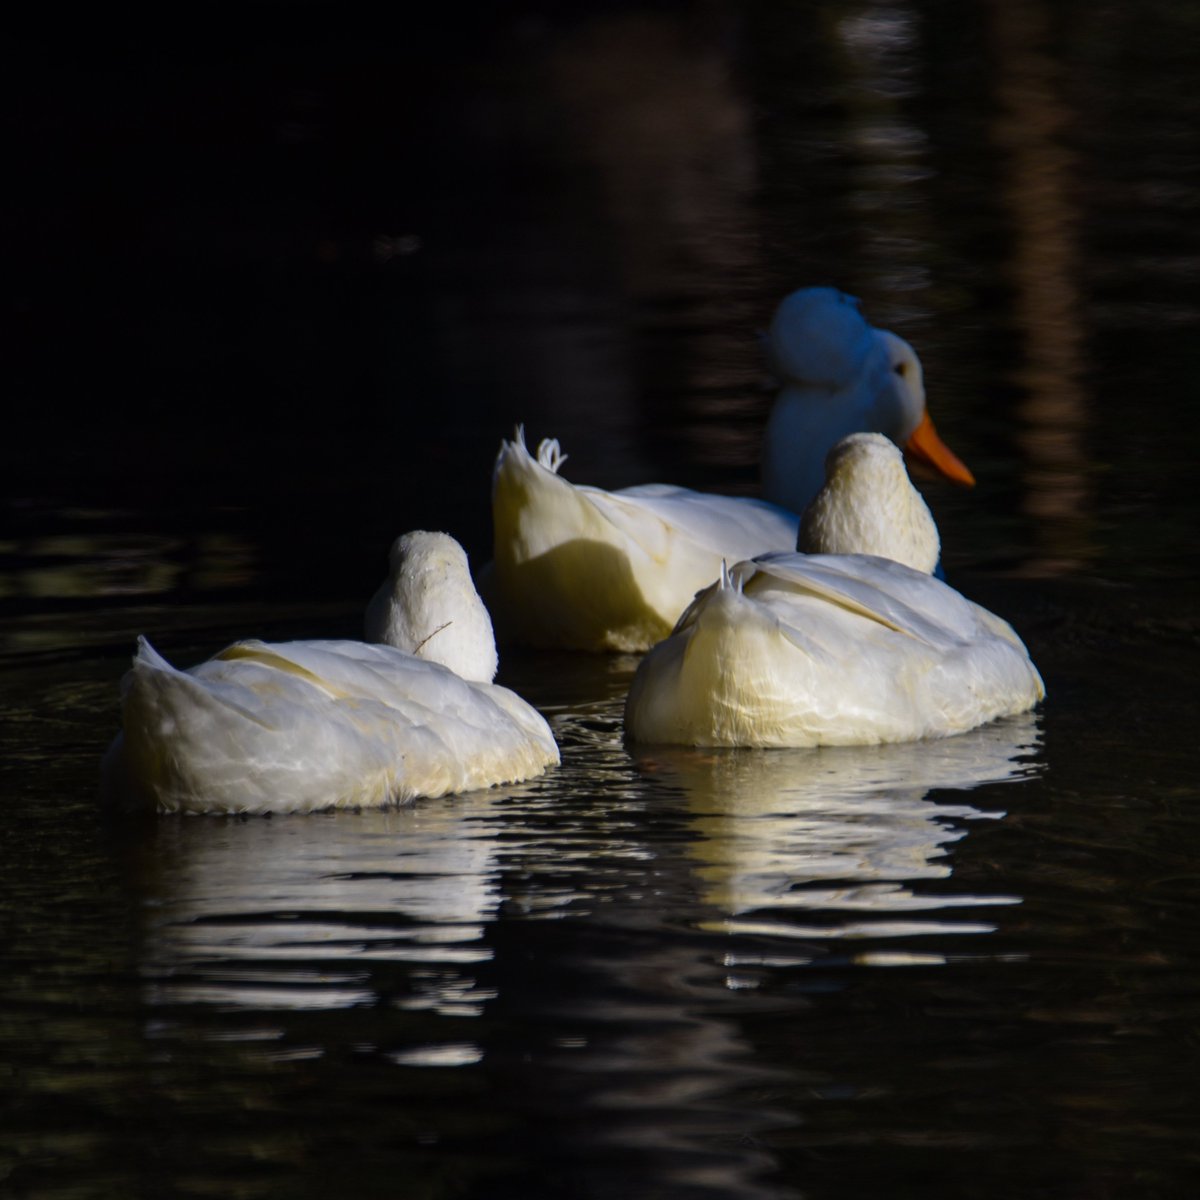 Relaxed Ducks paddling merrily along on a bucolic afternoon.

#crestedducks
#pekinducks
#pekinducksoftwitter
#crestedducksoftwitter
#ducks 
#greensboroboggarden
#greensboronc